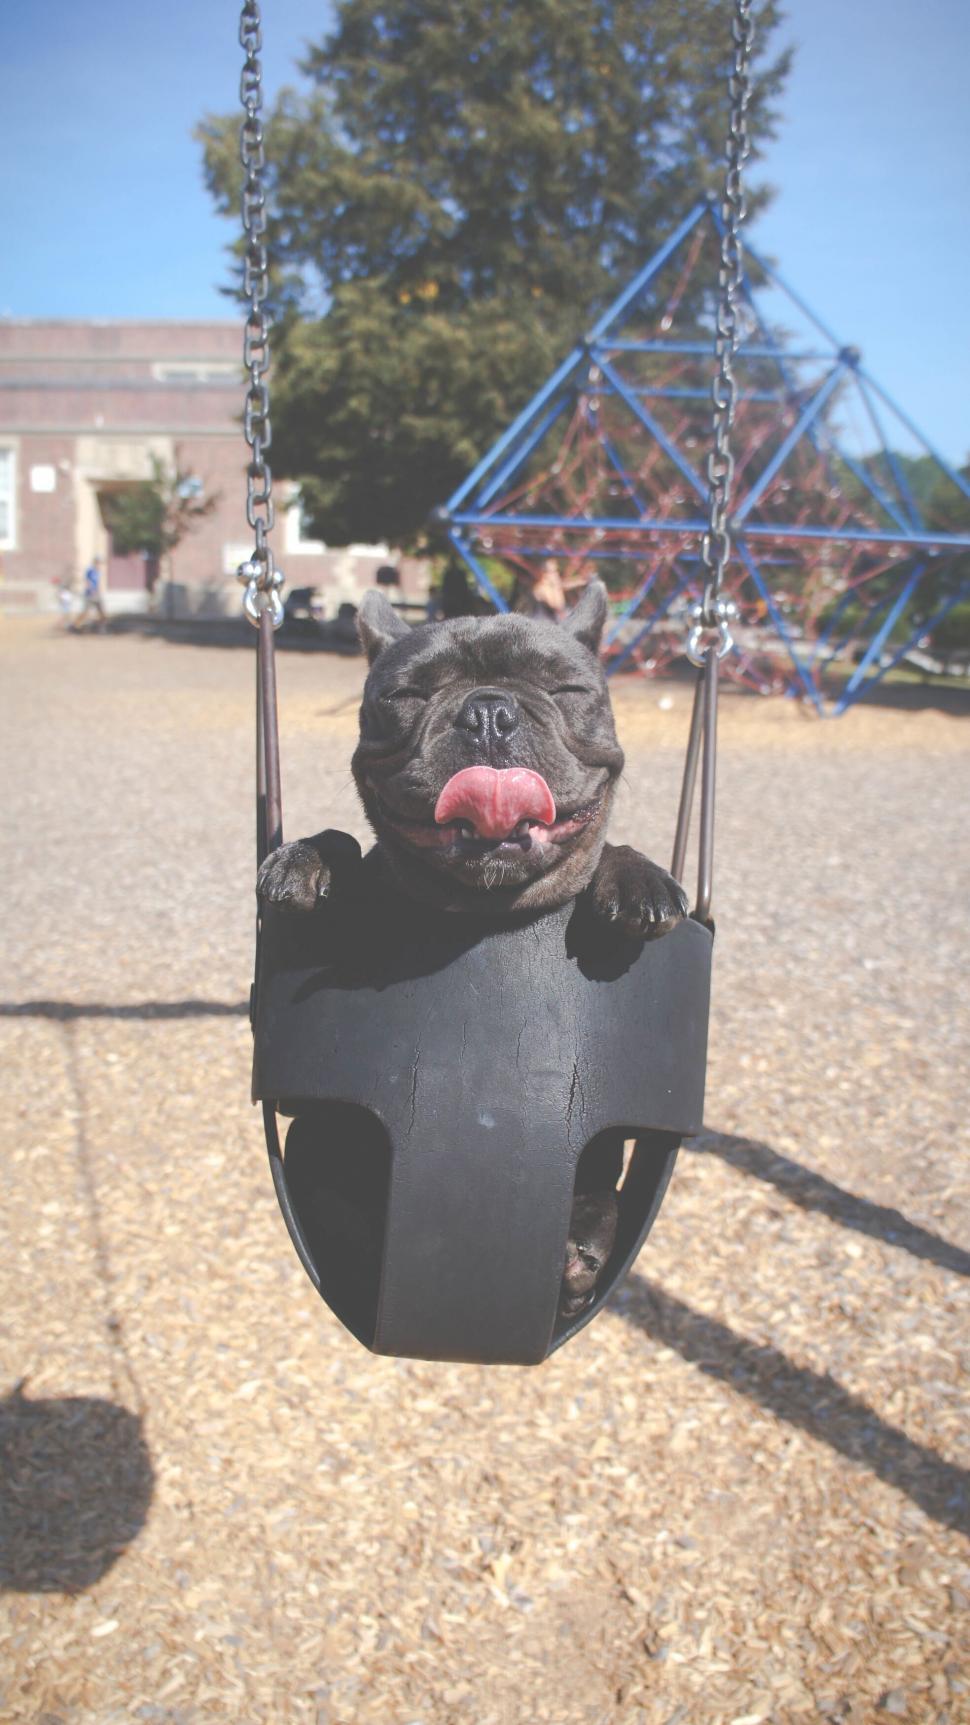 Free Image of French Bulldog swinging on a playground swing 